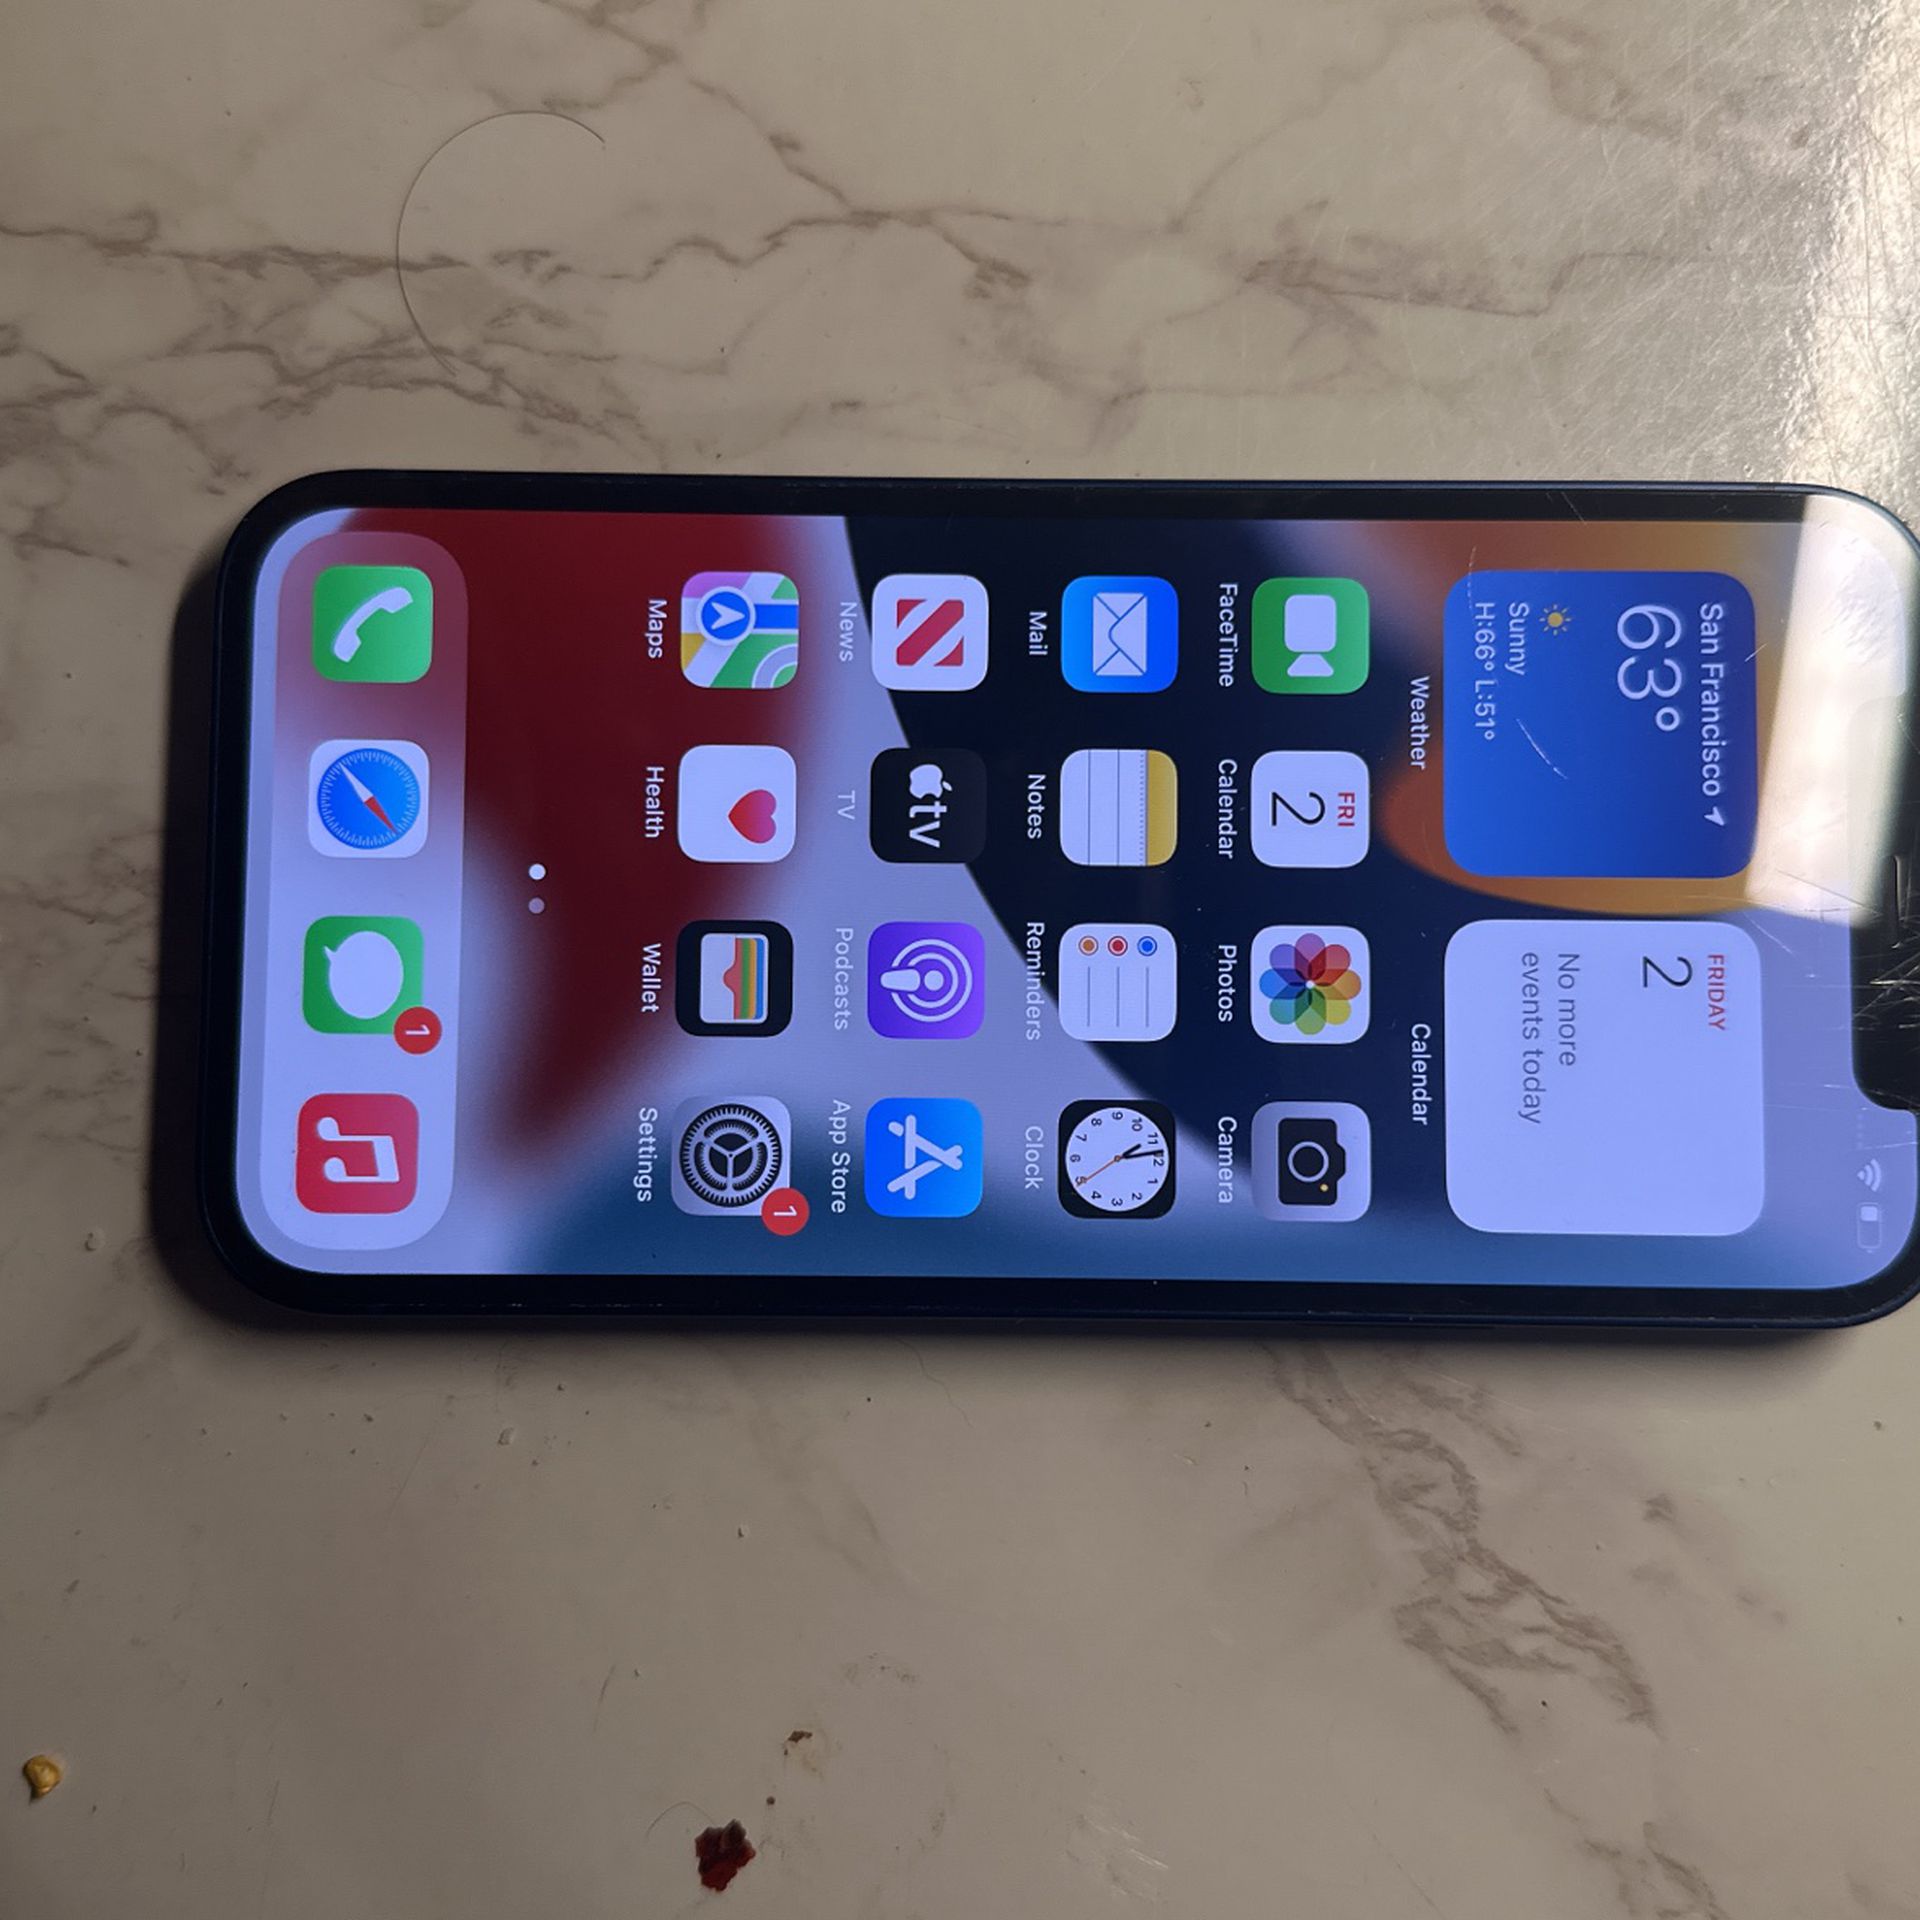 Iphone 12 unlocked - slightly used condition 